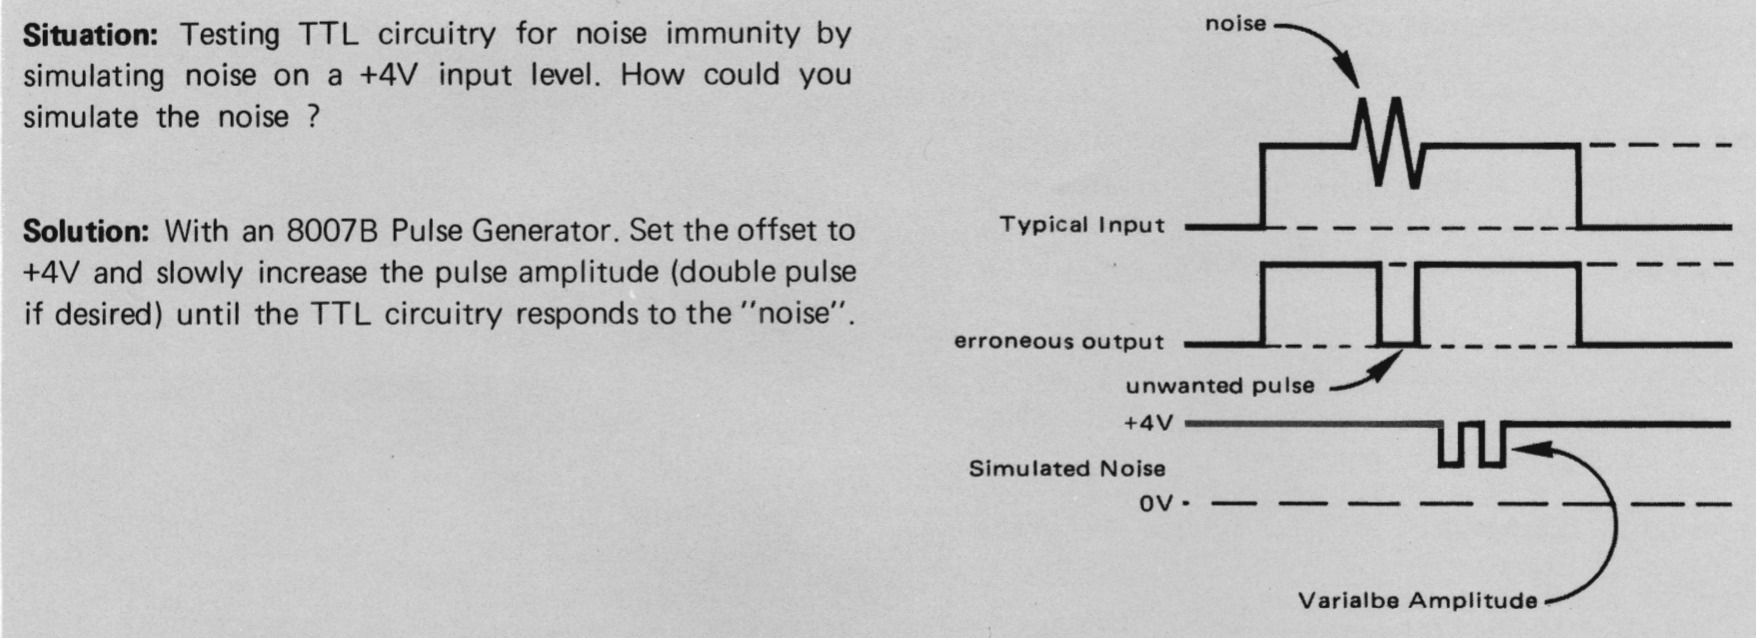 TTL noise immunity test